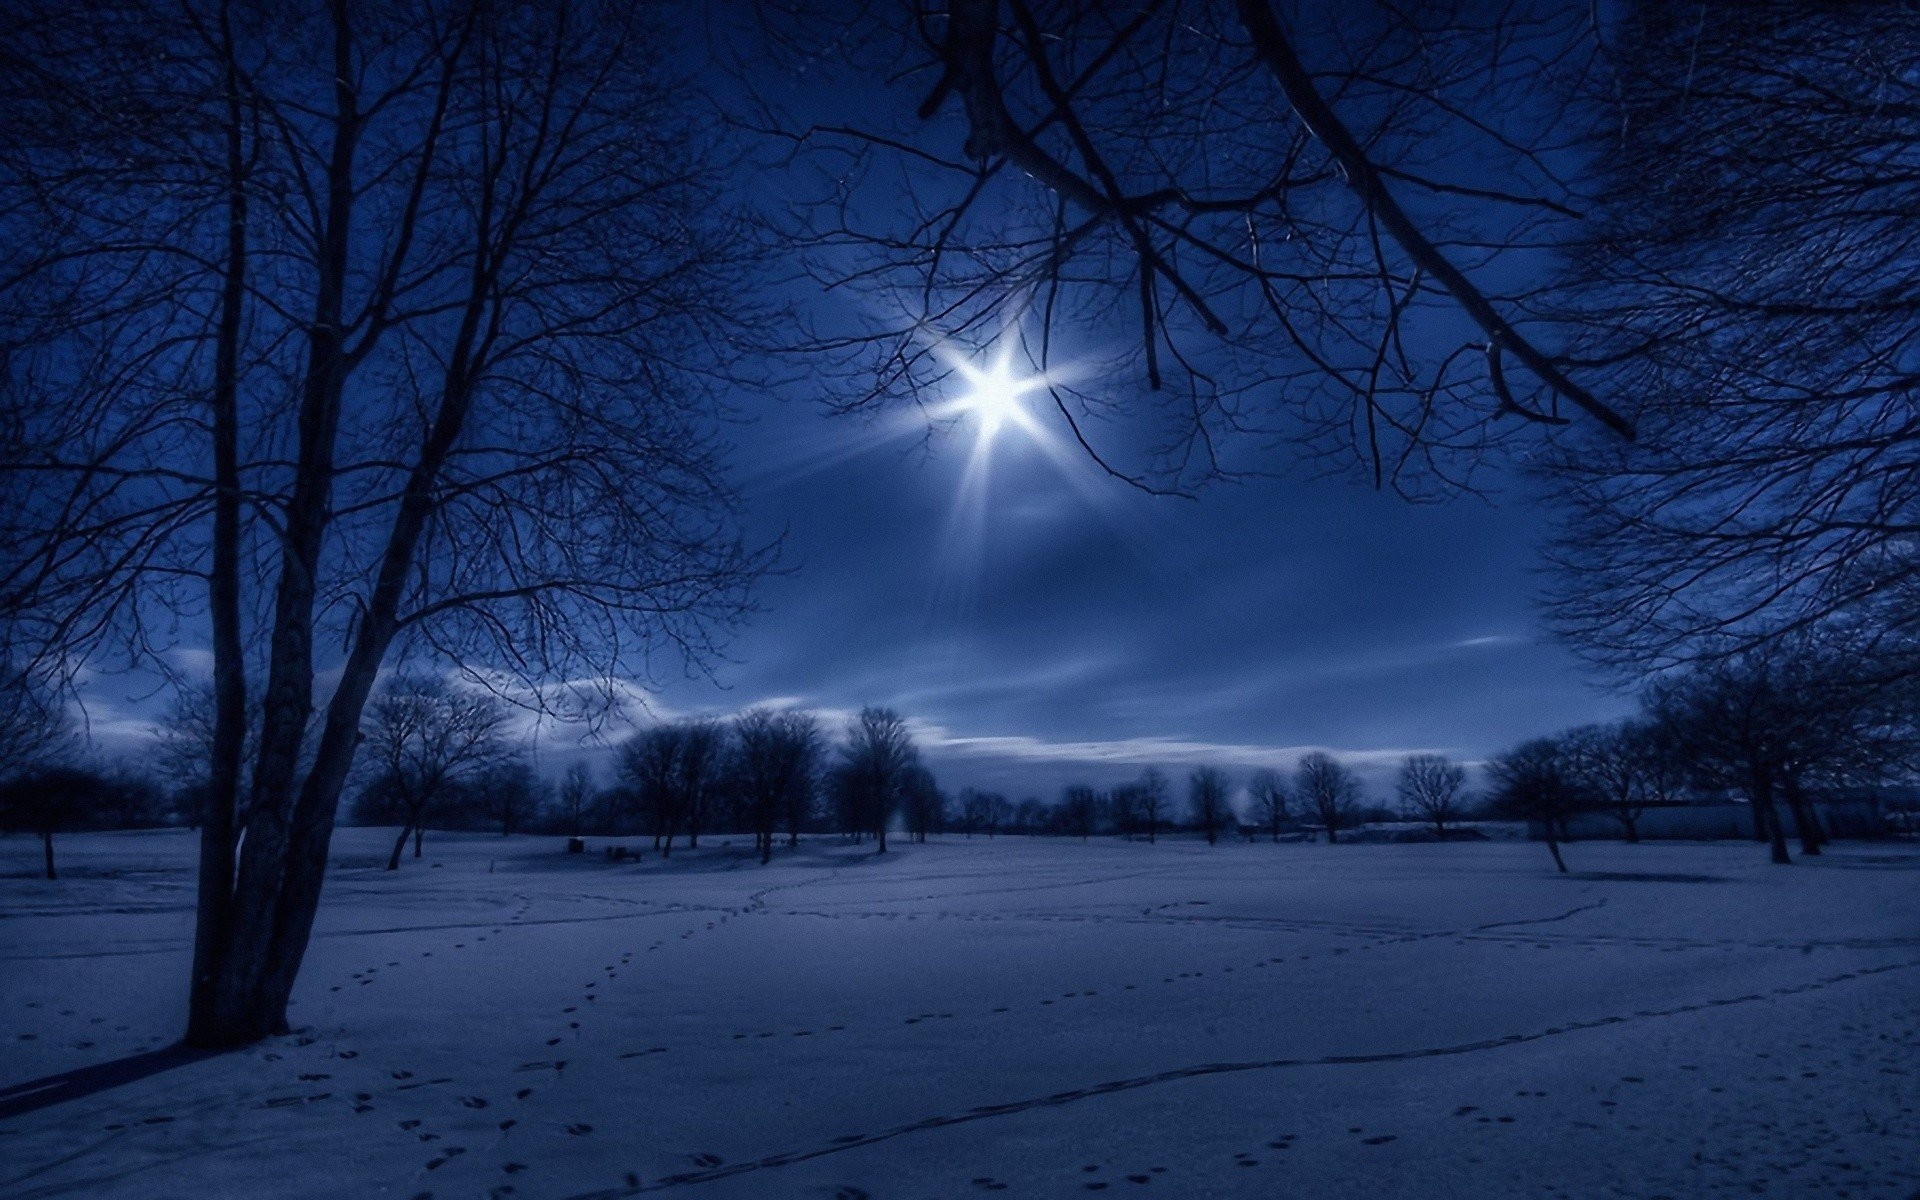 Winter Night In Moonlight Wallpaper Widescreen.